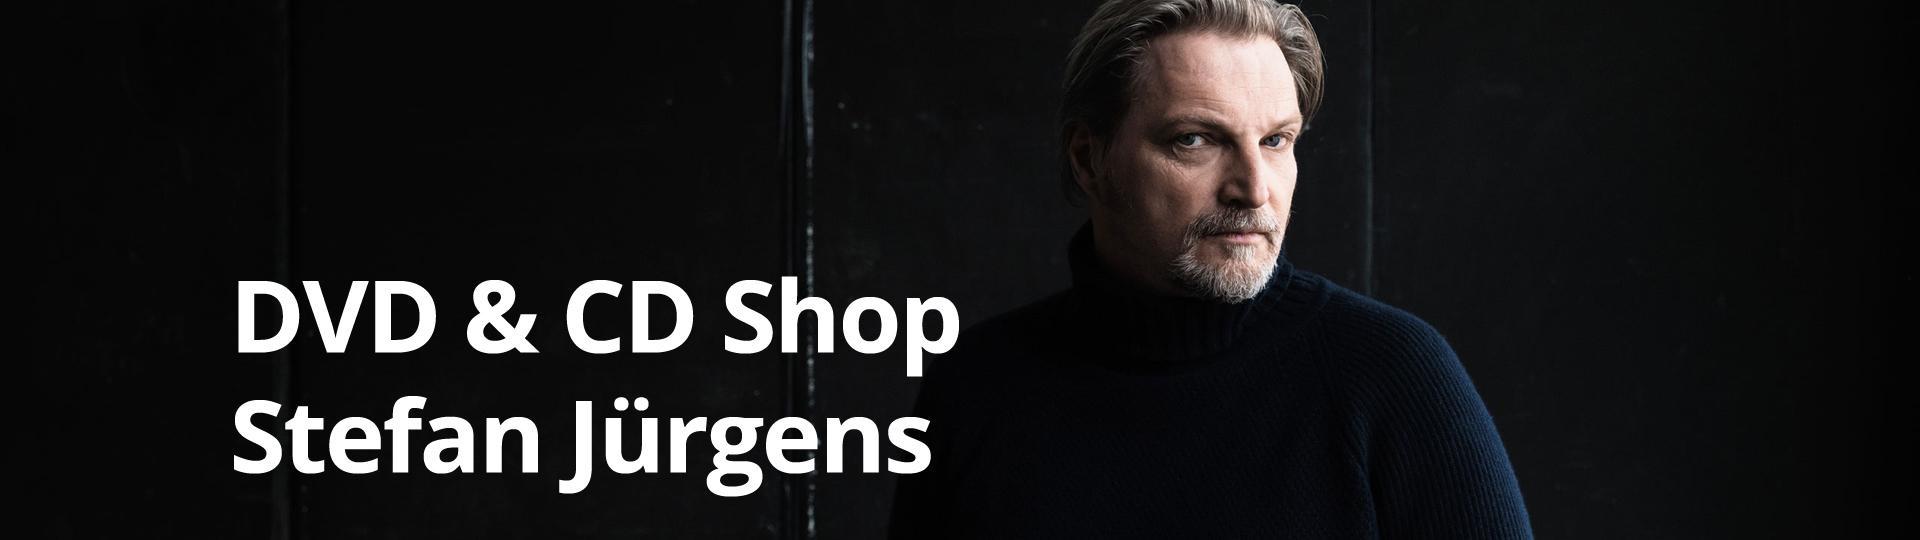 DVD & CD Shop Stefan Jürgens